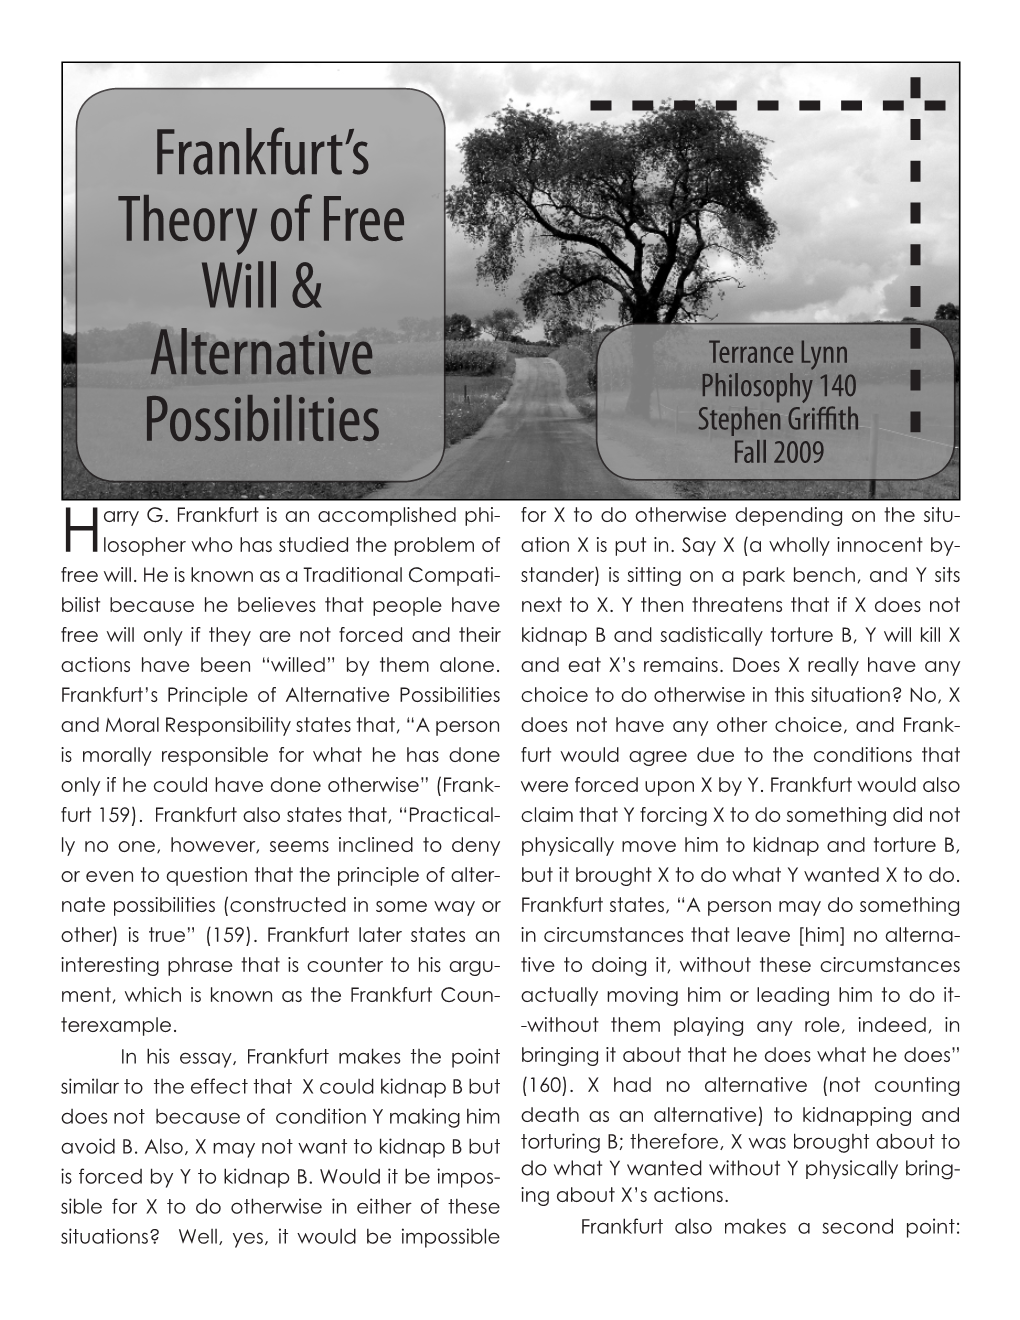 Frankfurt's Theory of Free Will & Alternative Possibilities